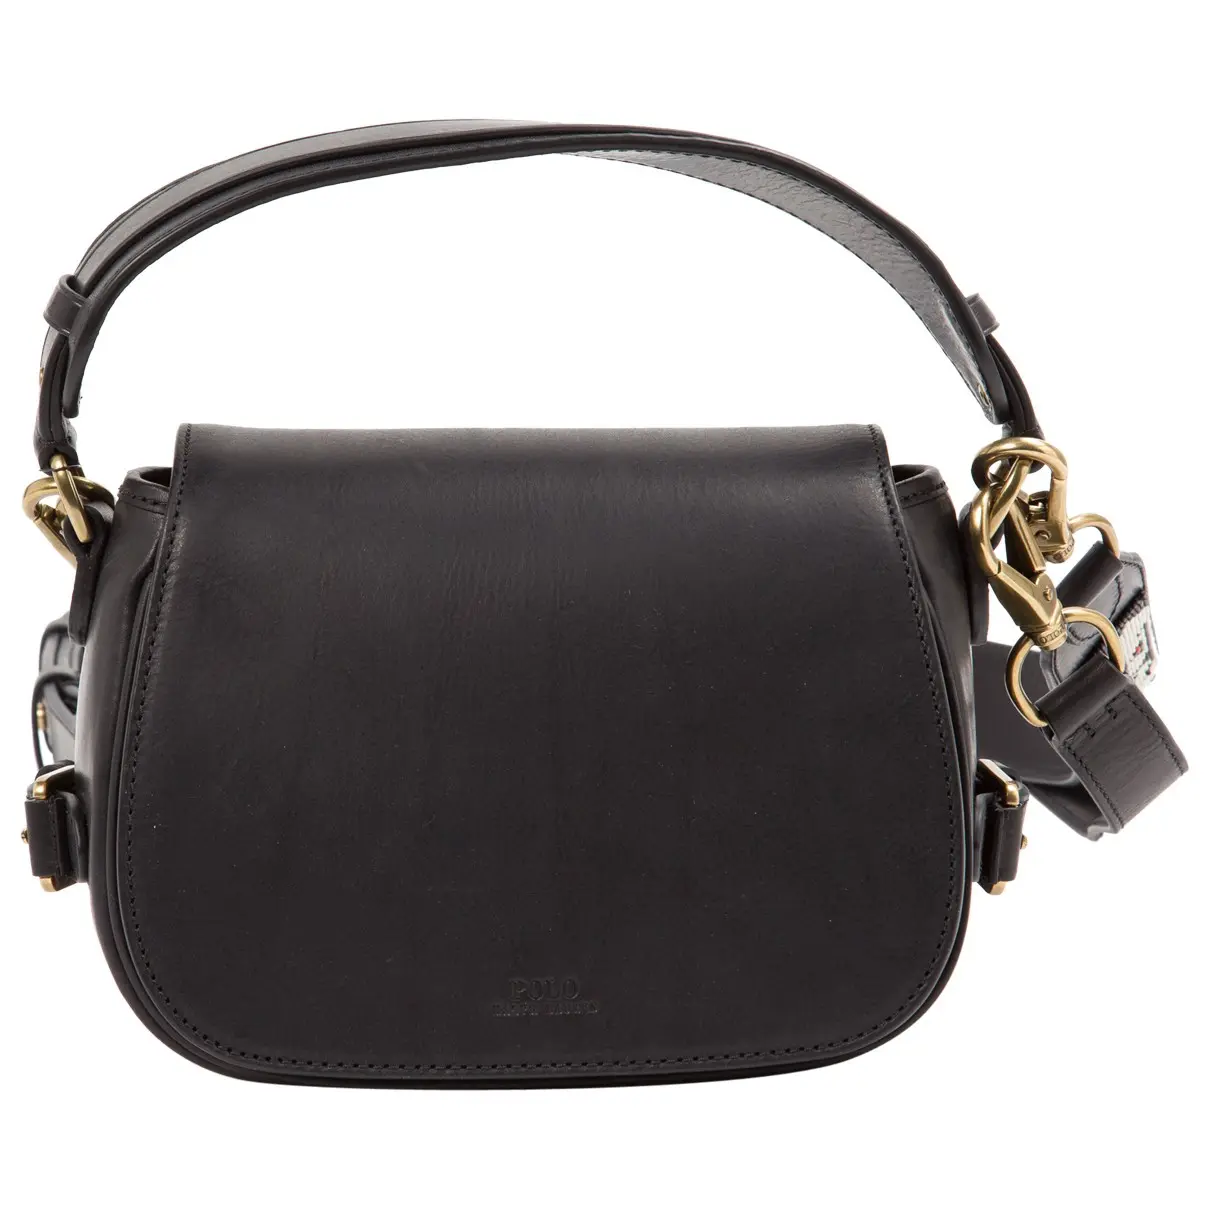 Leather handbag Polo Ralph Lauren